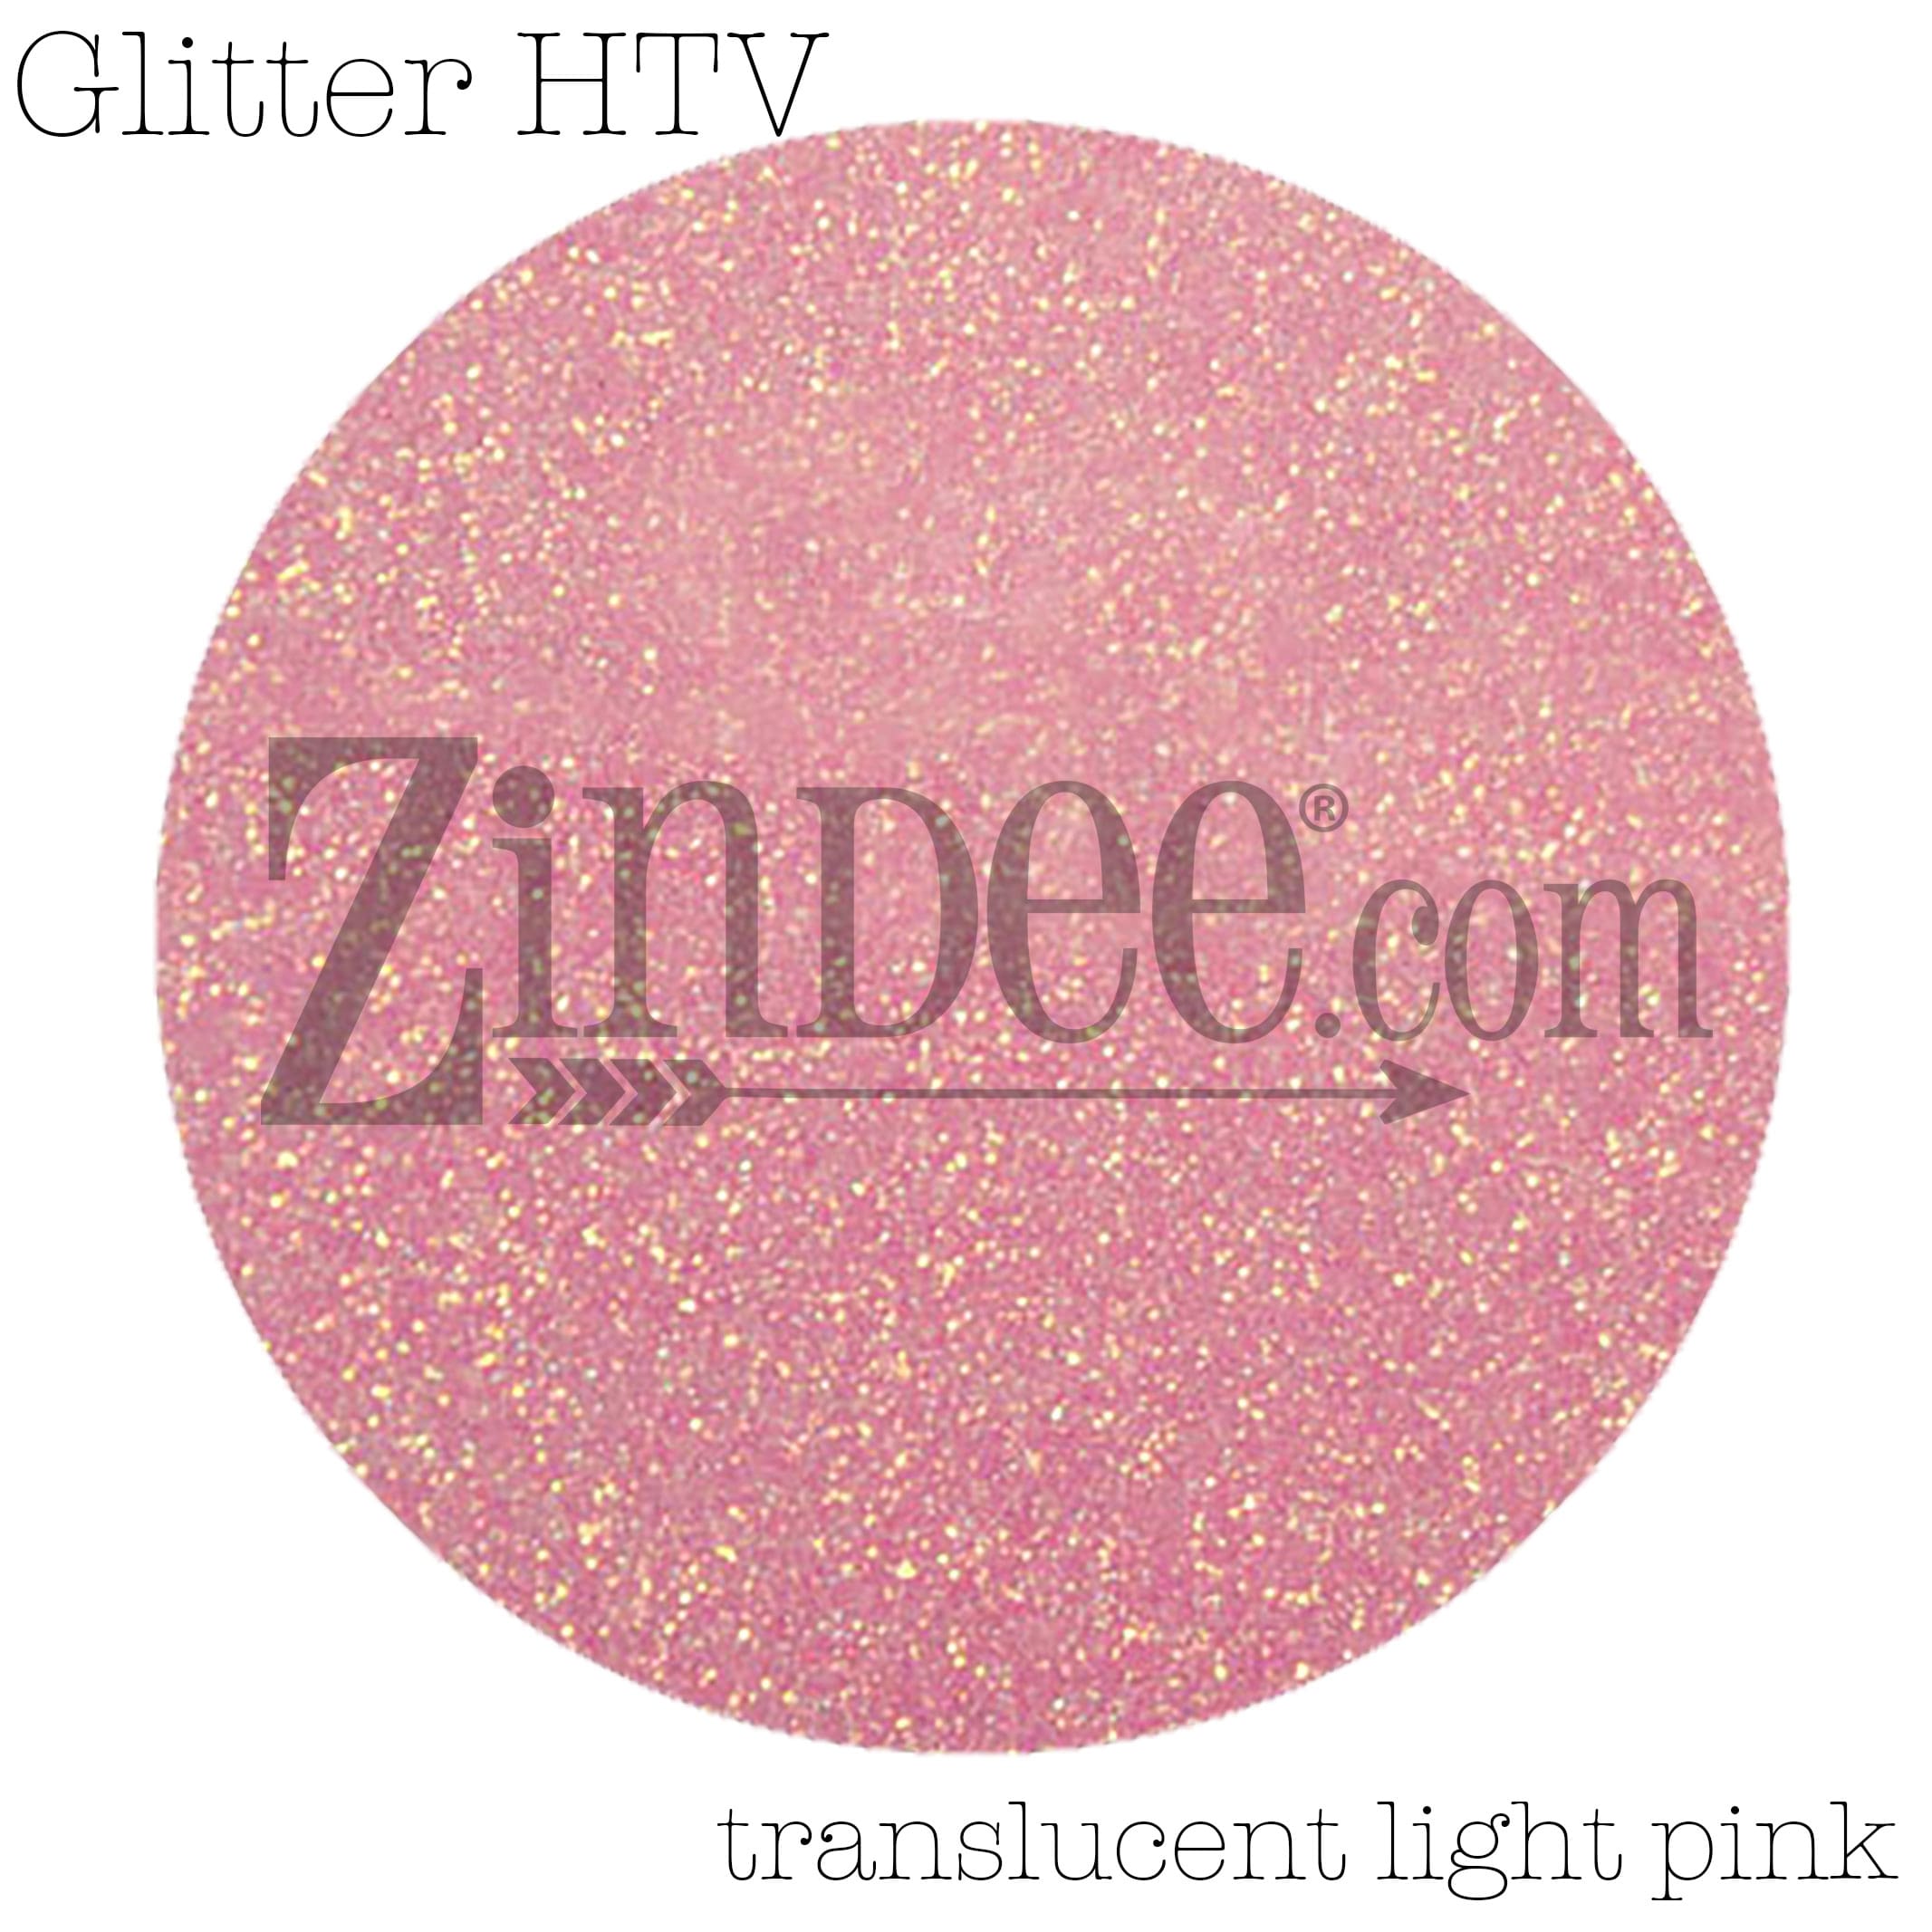 Glitter HTV Heat Transfer Vinyl 12 X 20 / 10 Sheets Pack / Siser Easyweed  Glitter / HTV / Glitter Heat Transfer Vinyl / Bundle 